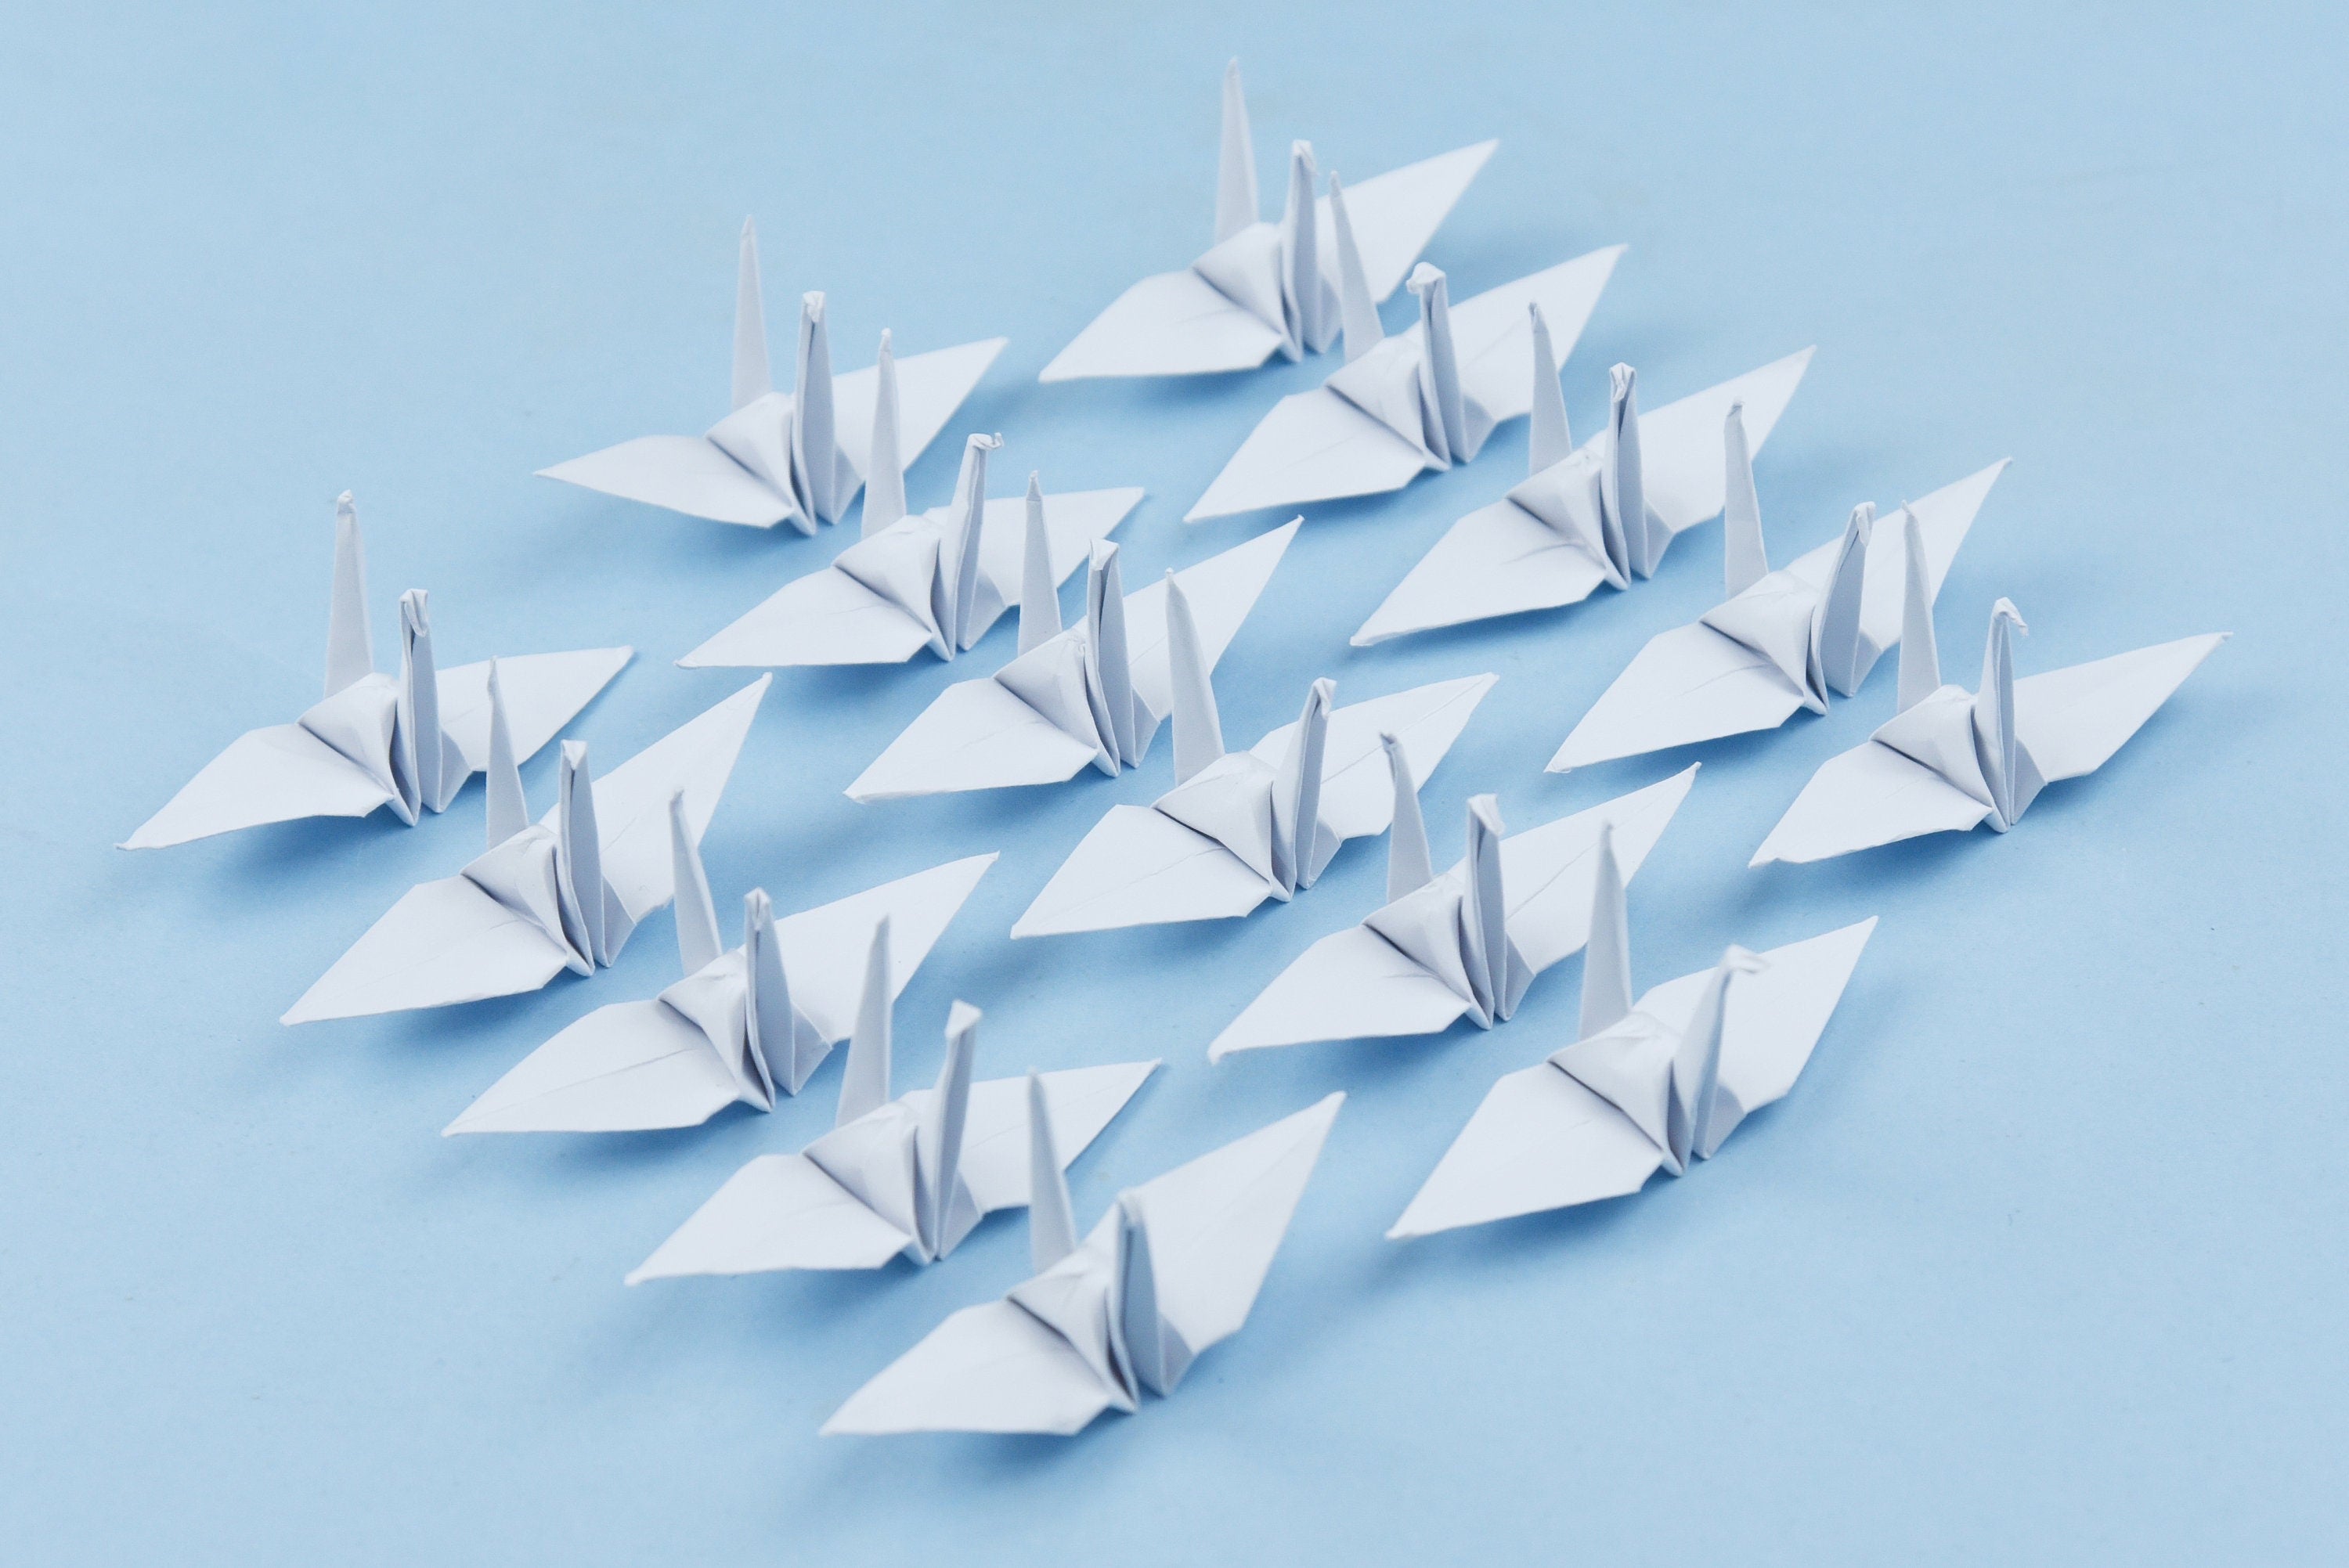 100 White Origami cranes 3x3 inches Pre-made for Wedding Decor, Anniversary Gift, Valentines, Backdrop